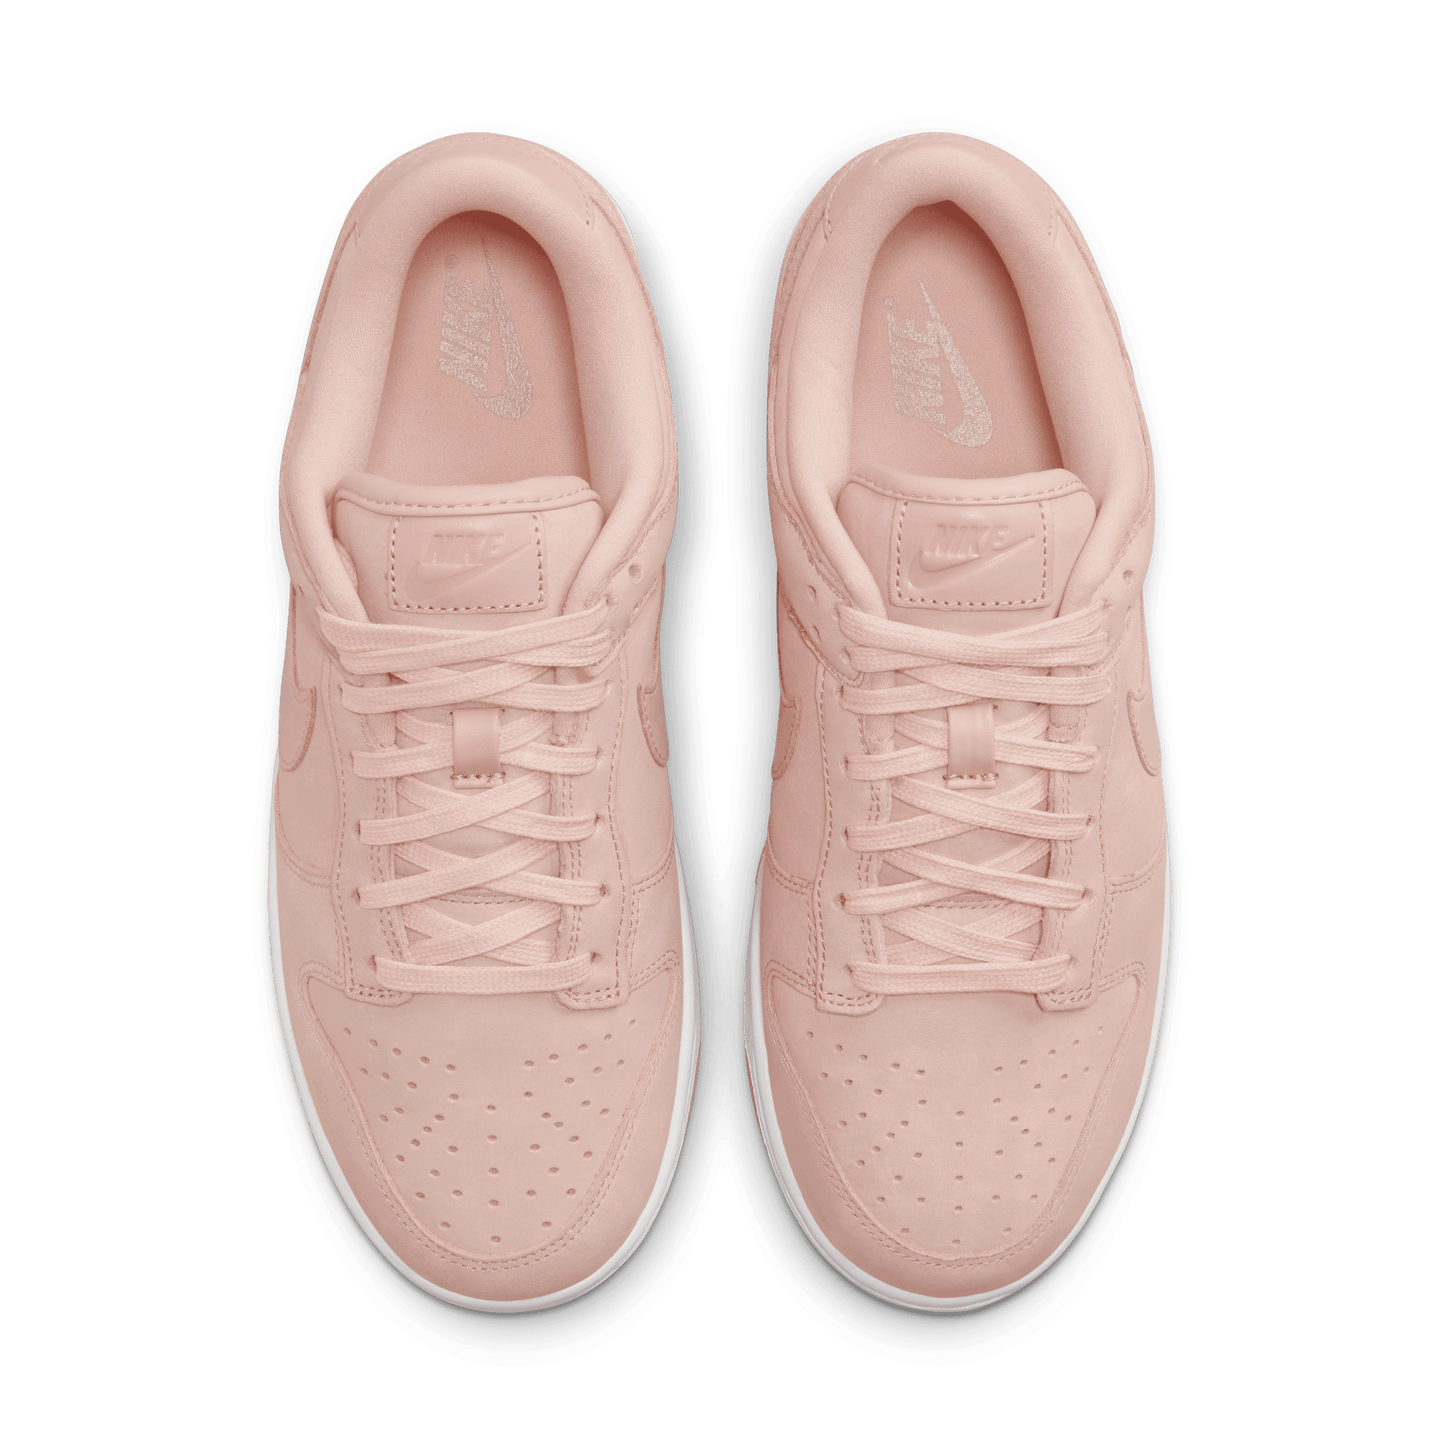 Nike Women's Dunk Low Premium MF Pink Oxford